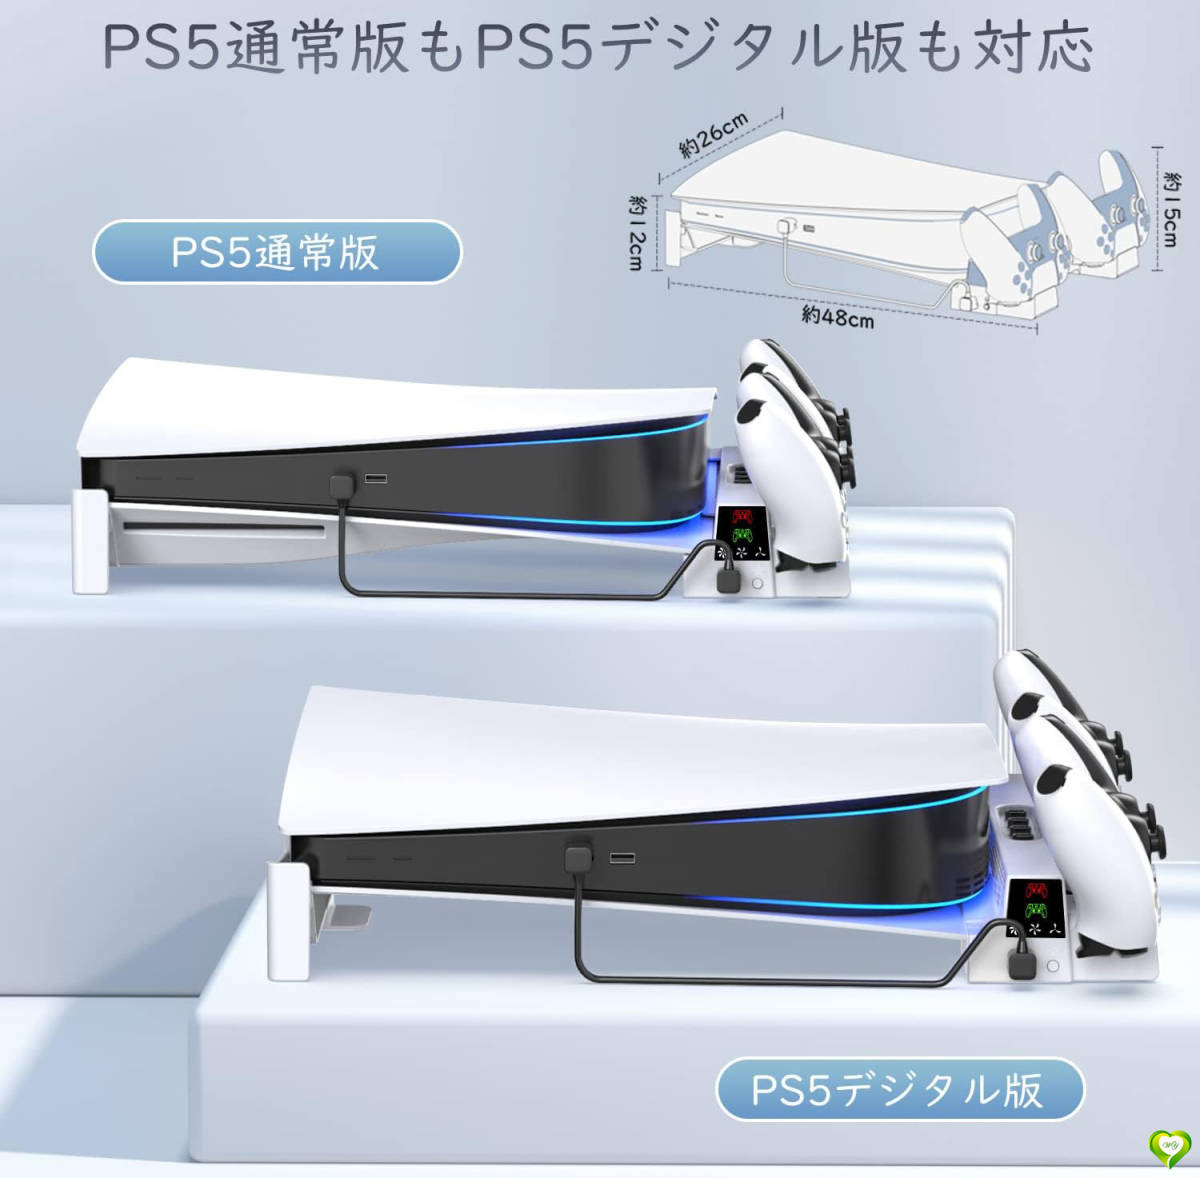 PS5 横置き 冷却ファン スタンド 充電スタンド PS5通常版とデジタル版両対応 ハイパワー 冷却 冷感 排熱 静音 放熱改善 傷防_画像3